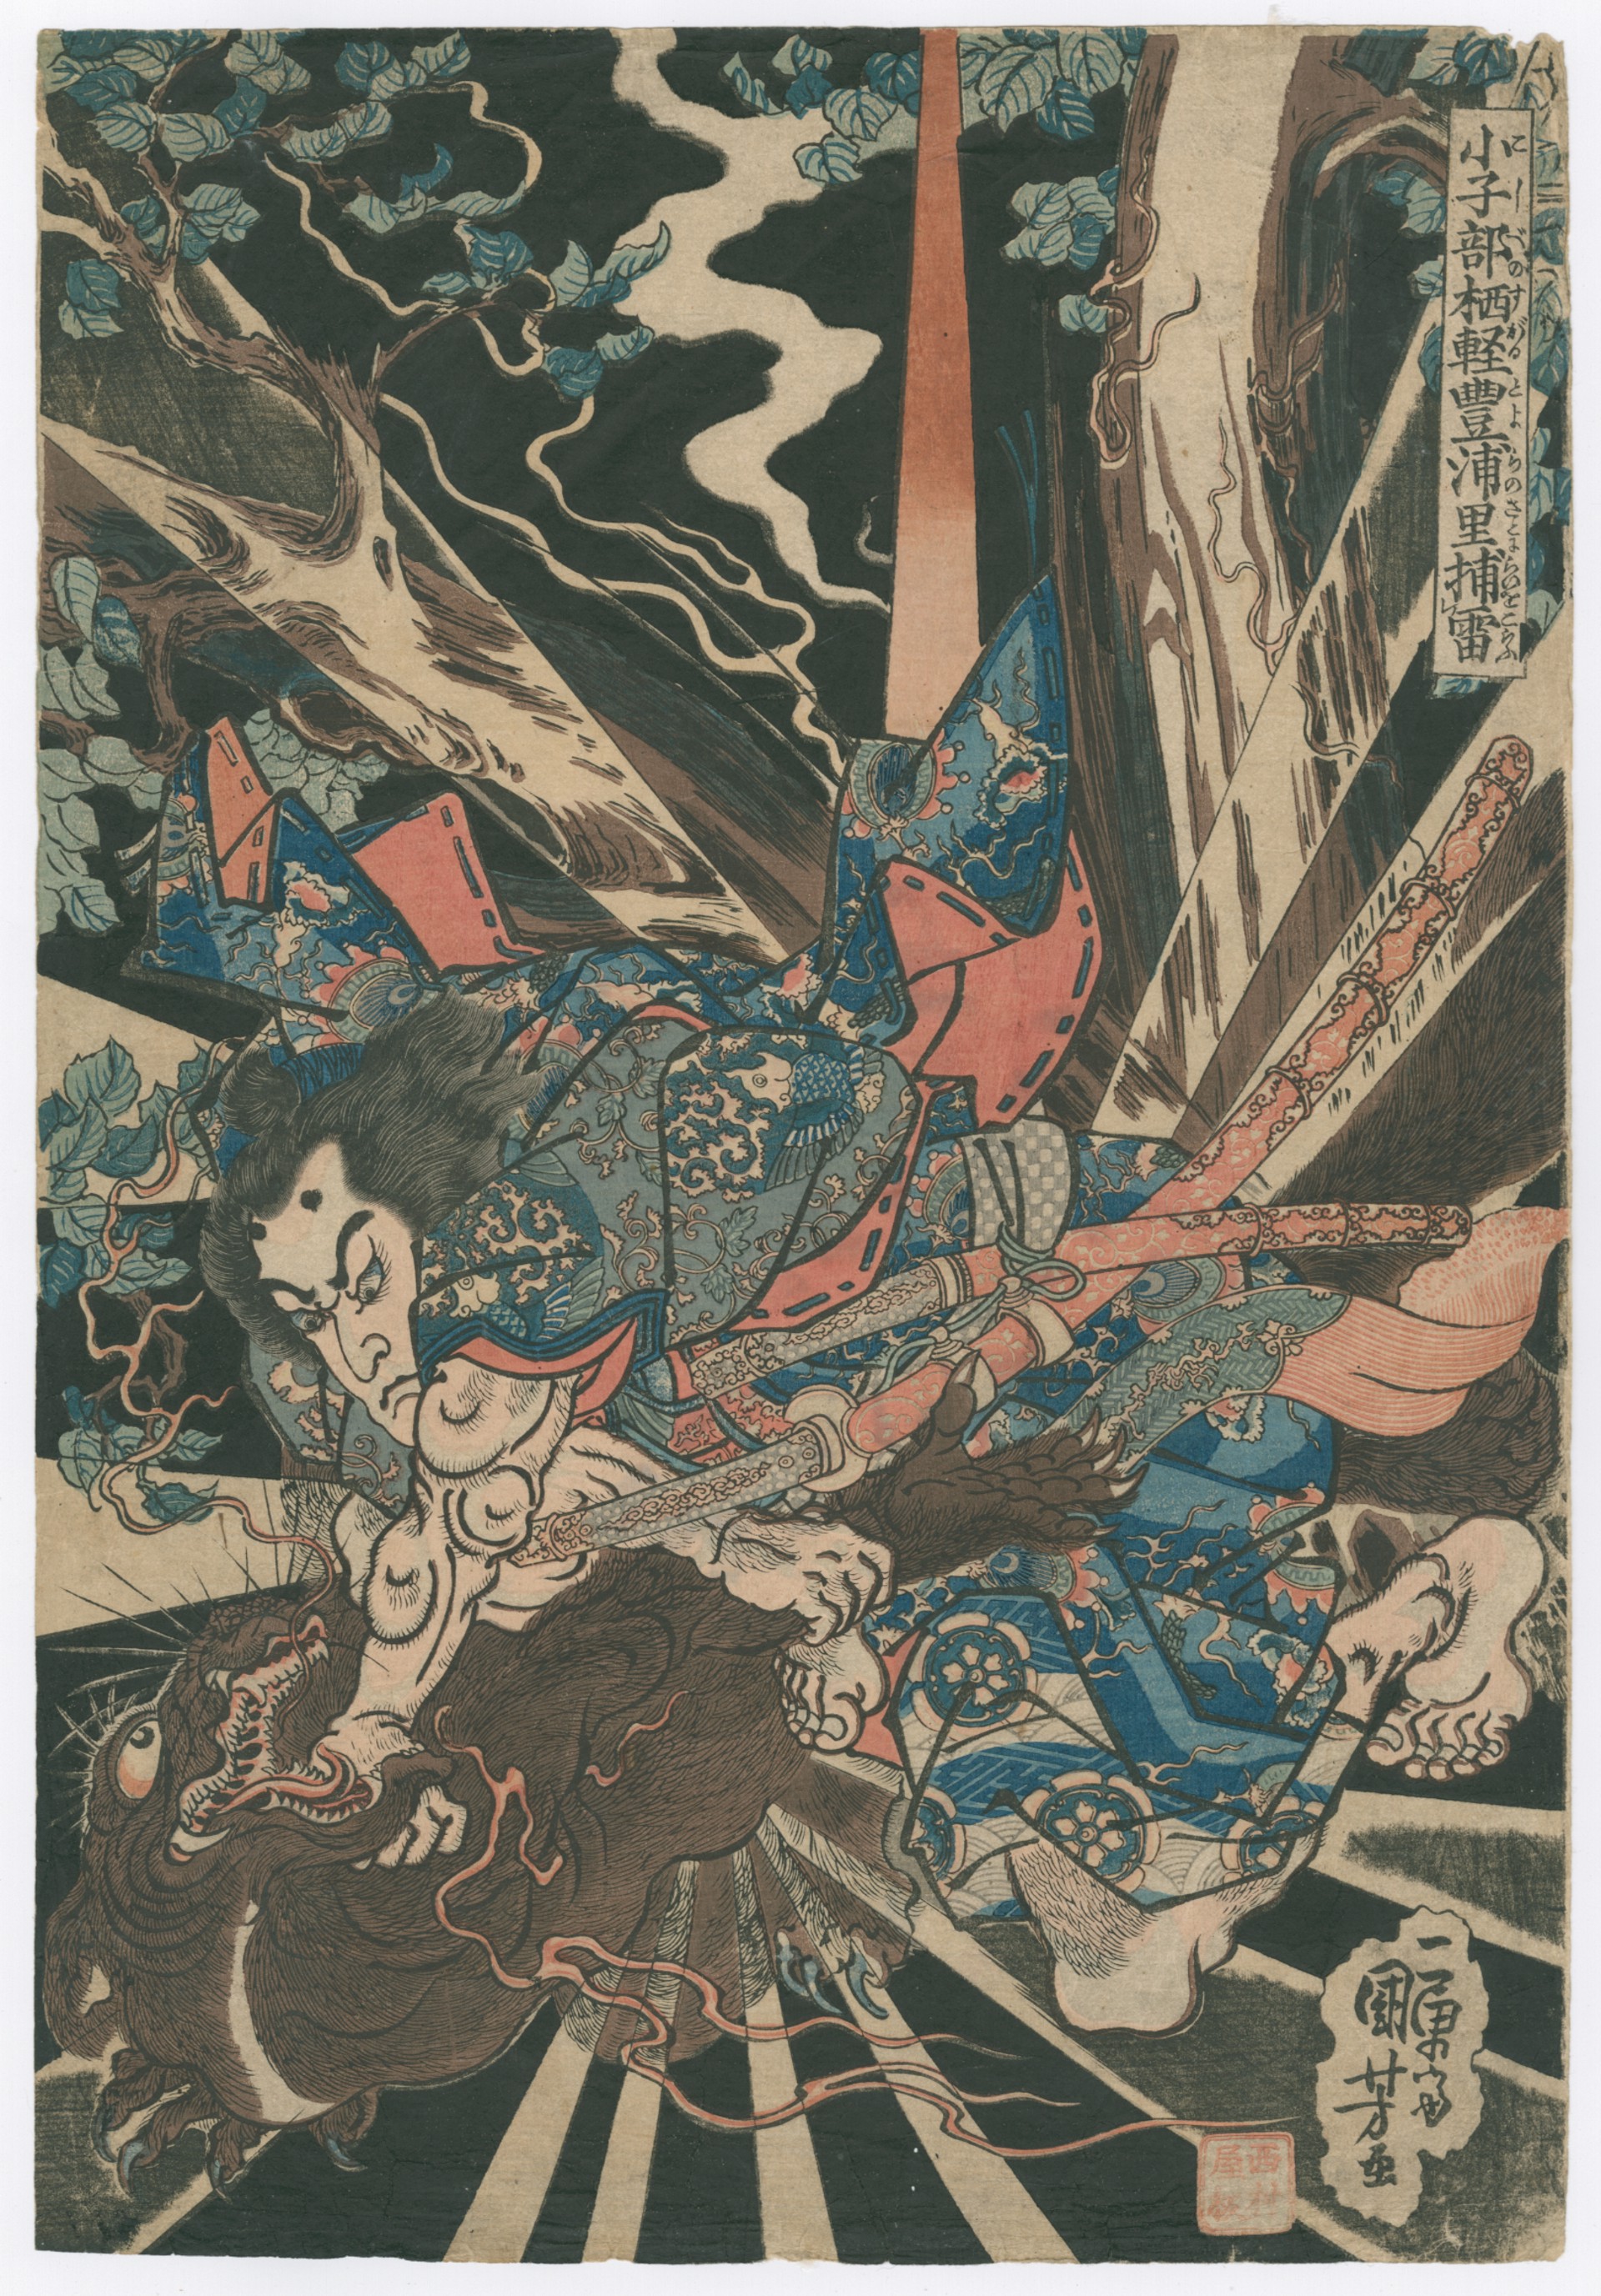 Koshibe no Sugaru Capturing a (Raiju Monster) amid Flames and Lightning in Toyo-Ura Village. Untitled Warrior Series by Kuniyoshi